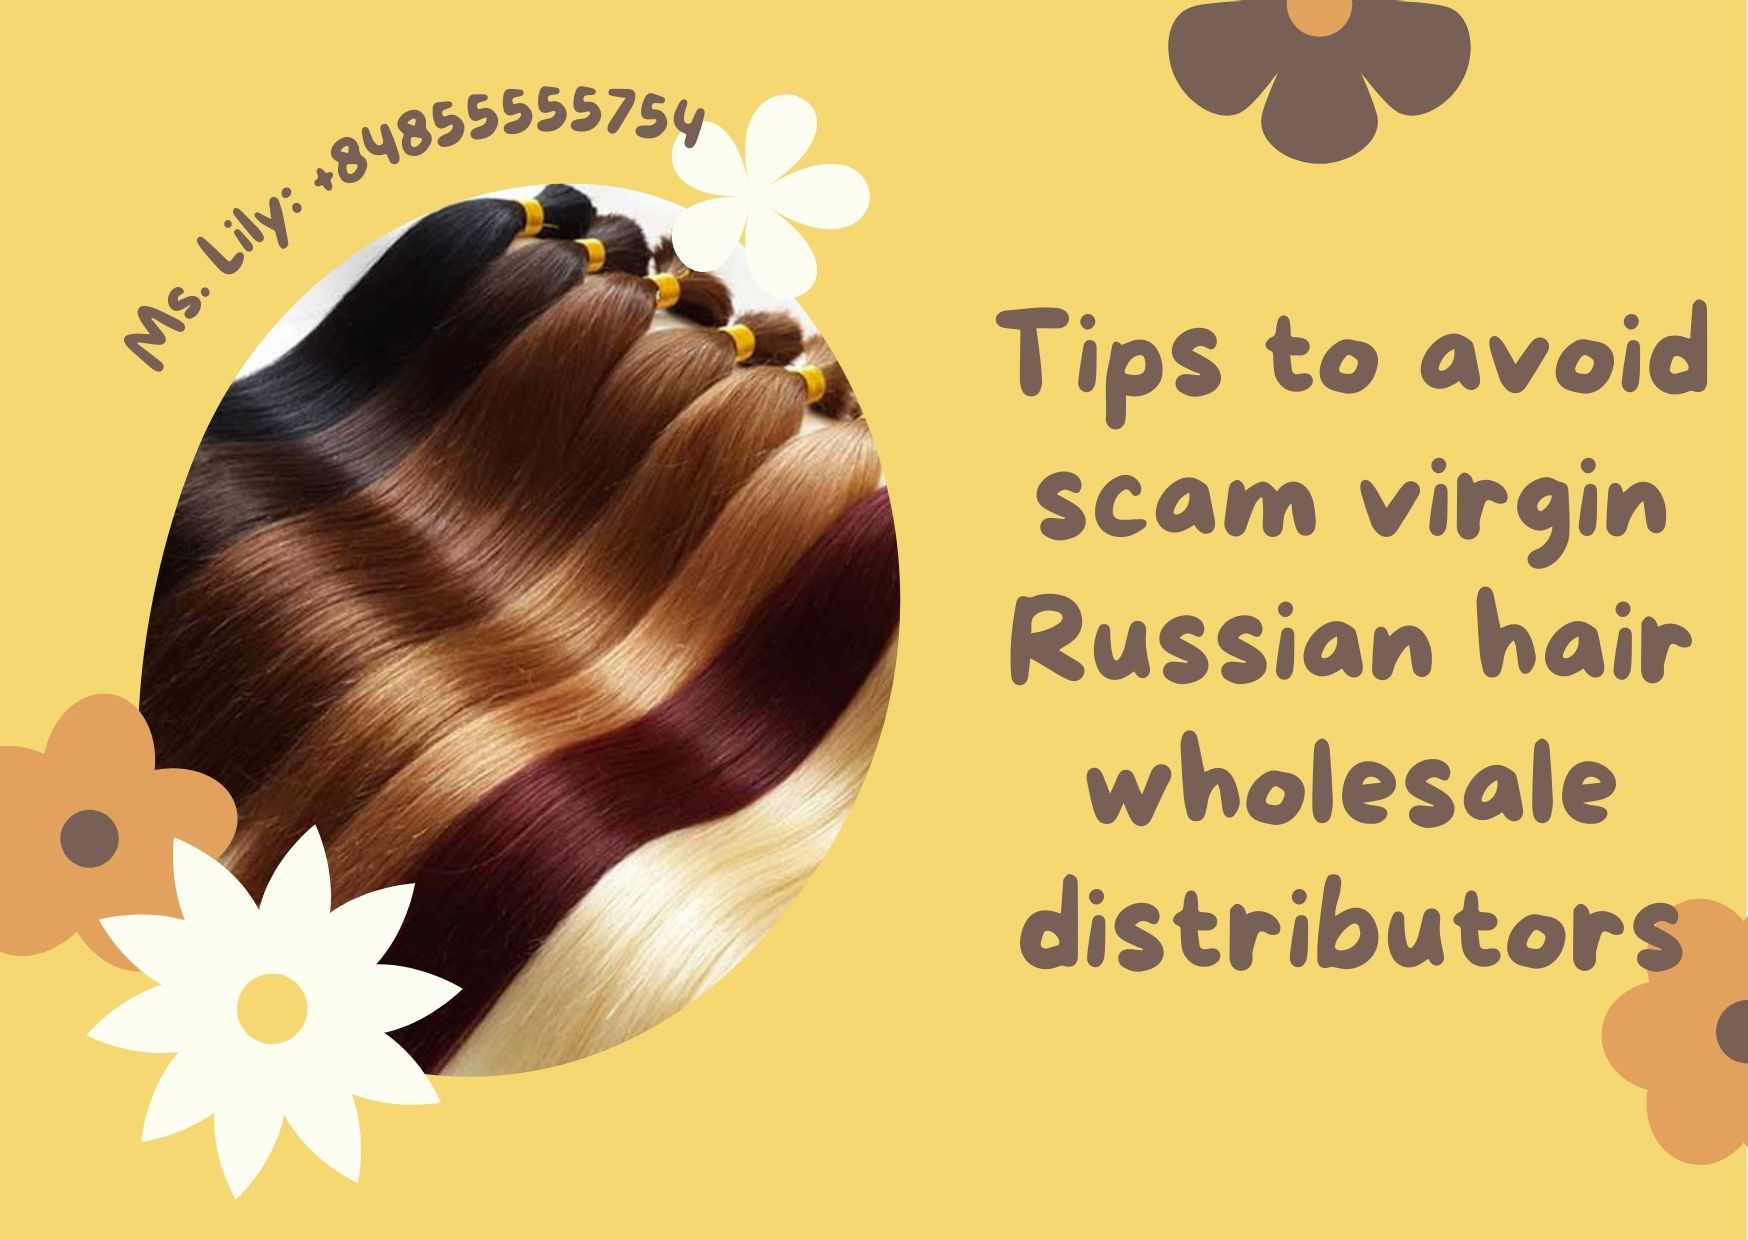 tips-to-avoid-scam-virgin-russian-hair-wholesale-distributors-1